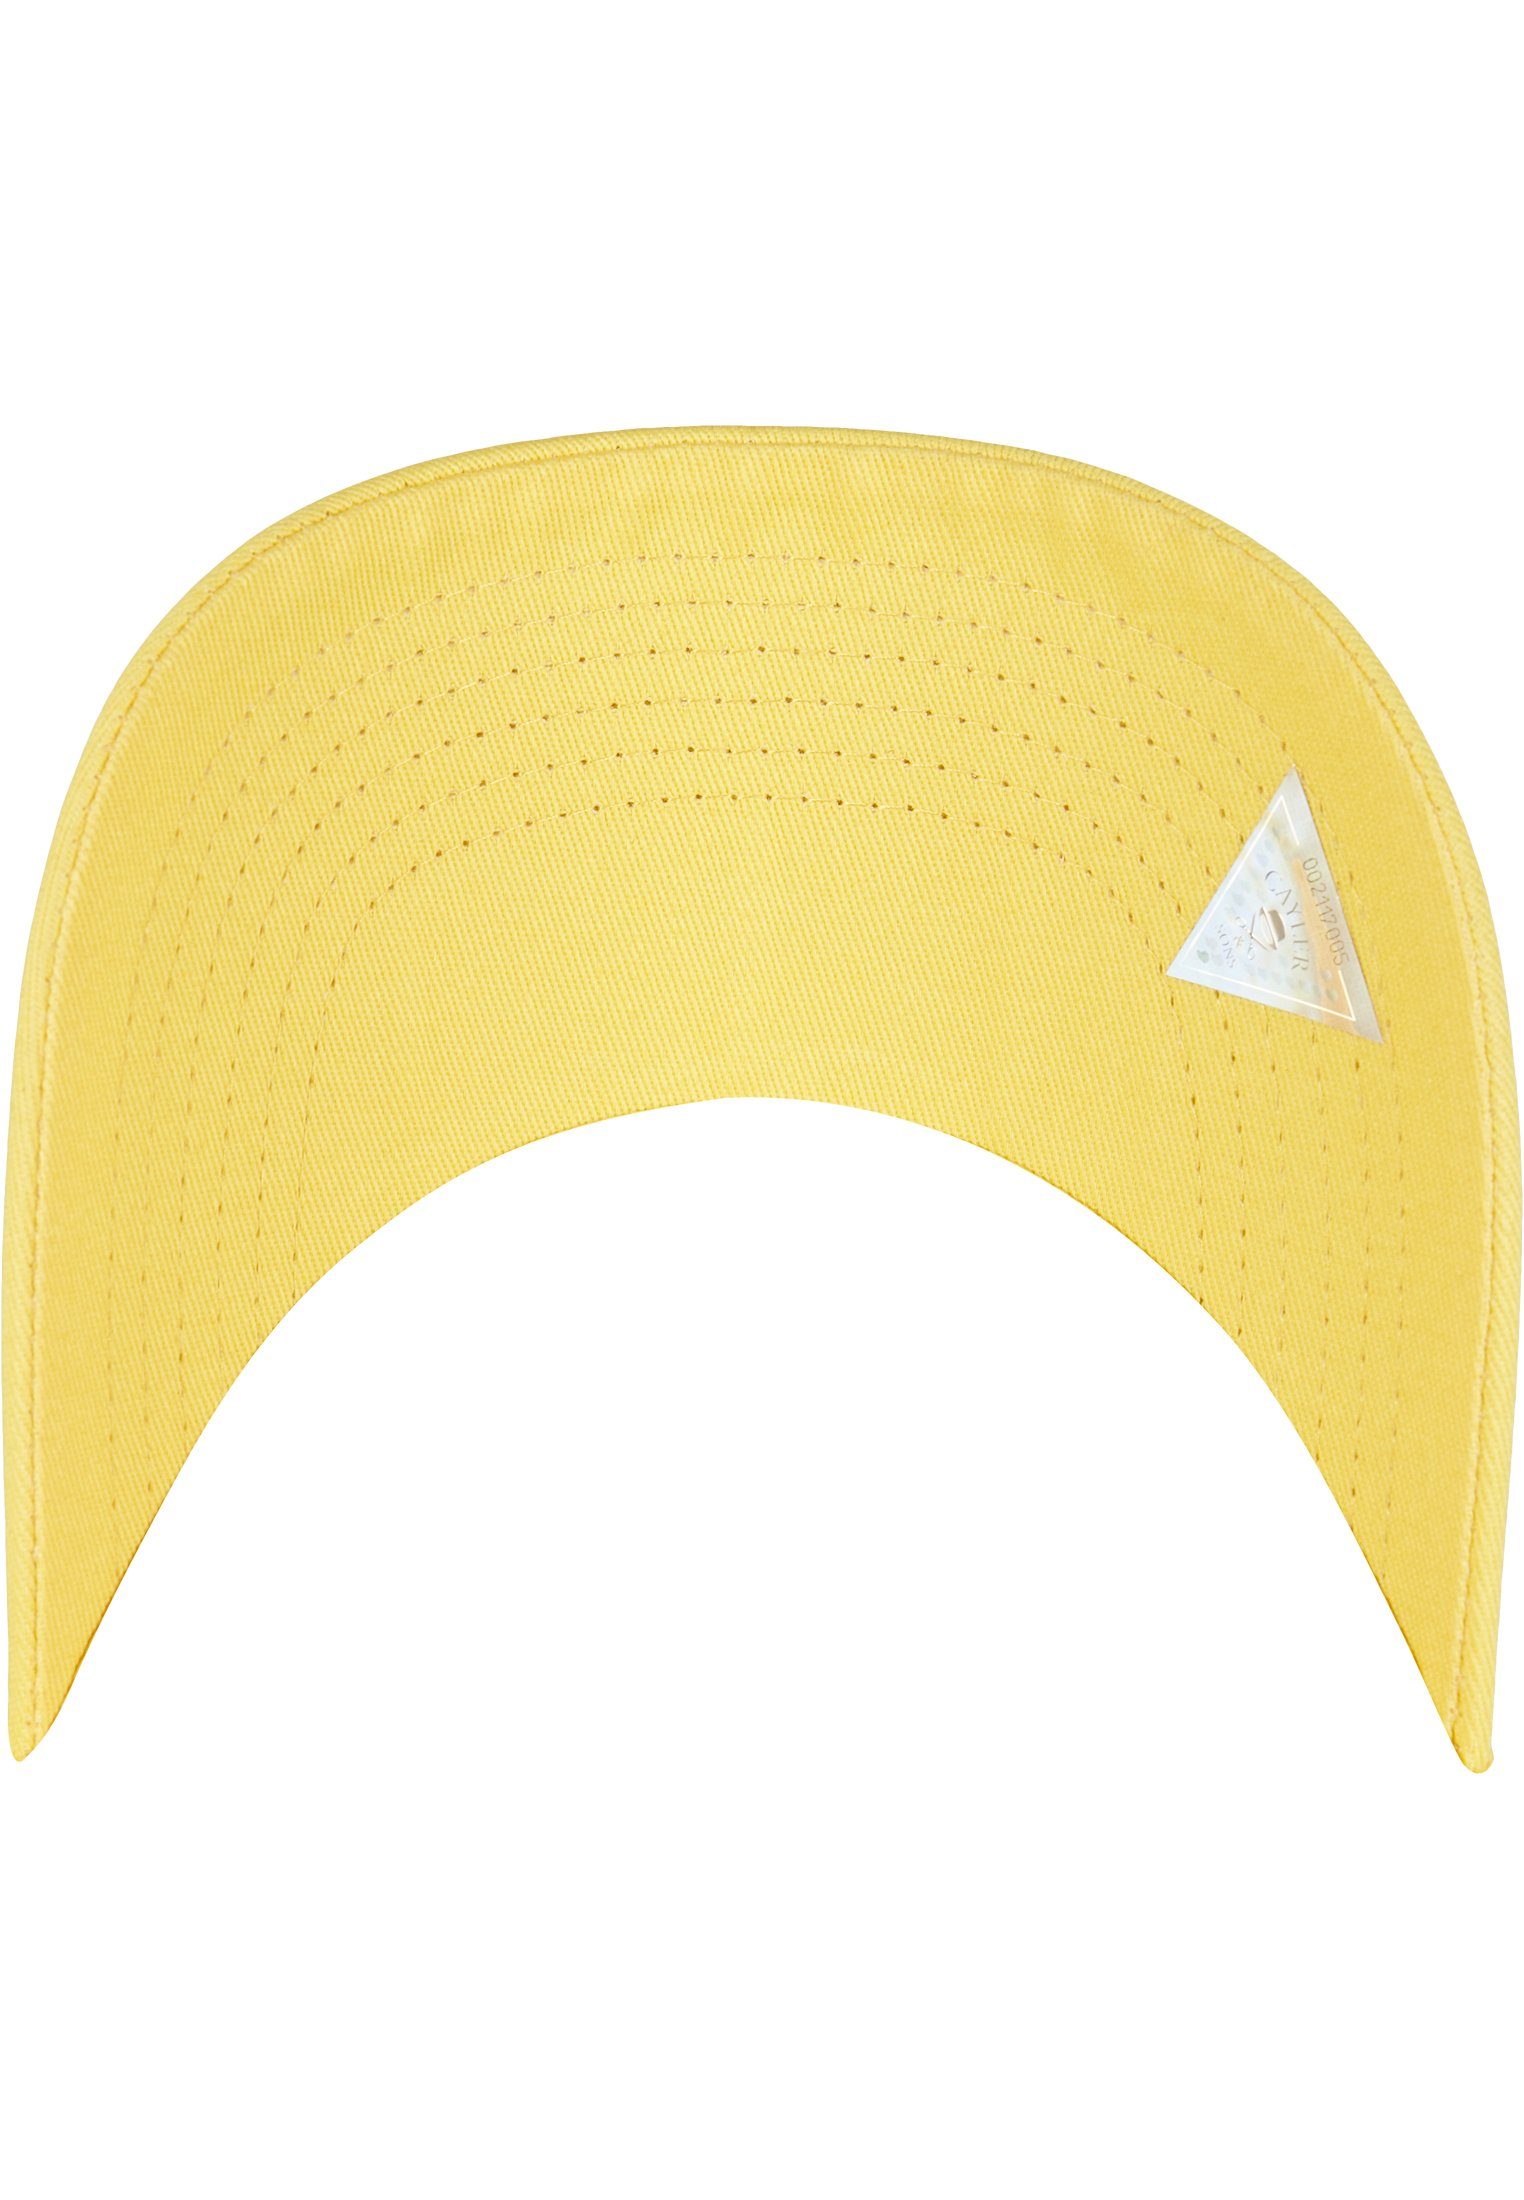 Peace CAYLER C&S yellow/multicolor Flex Cap Curved & SONS Iconic Cap